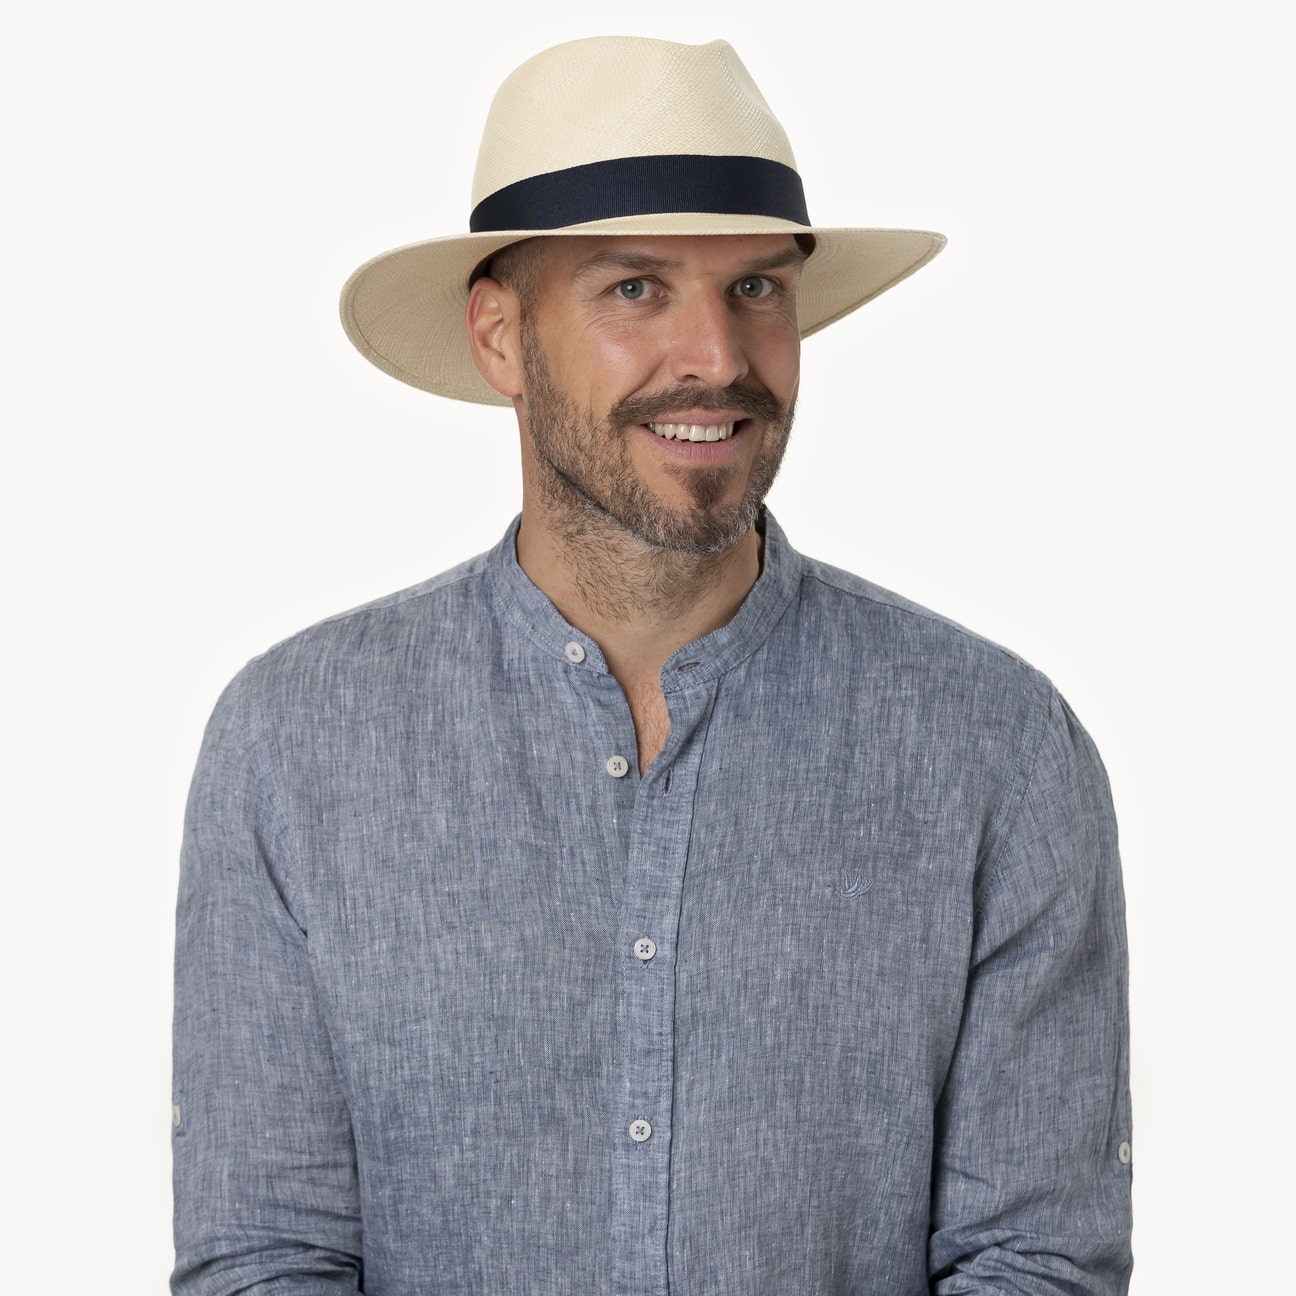 Mens Panama Hats, Panama Hat